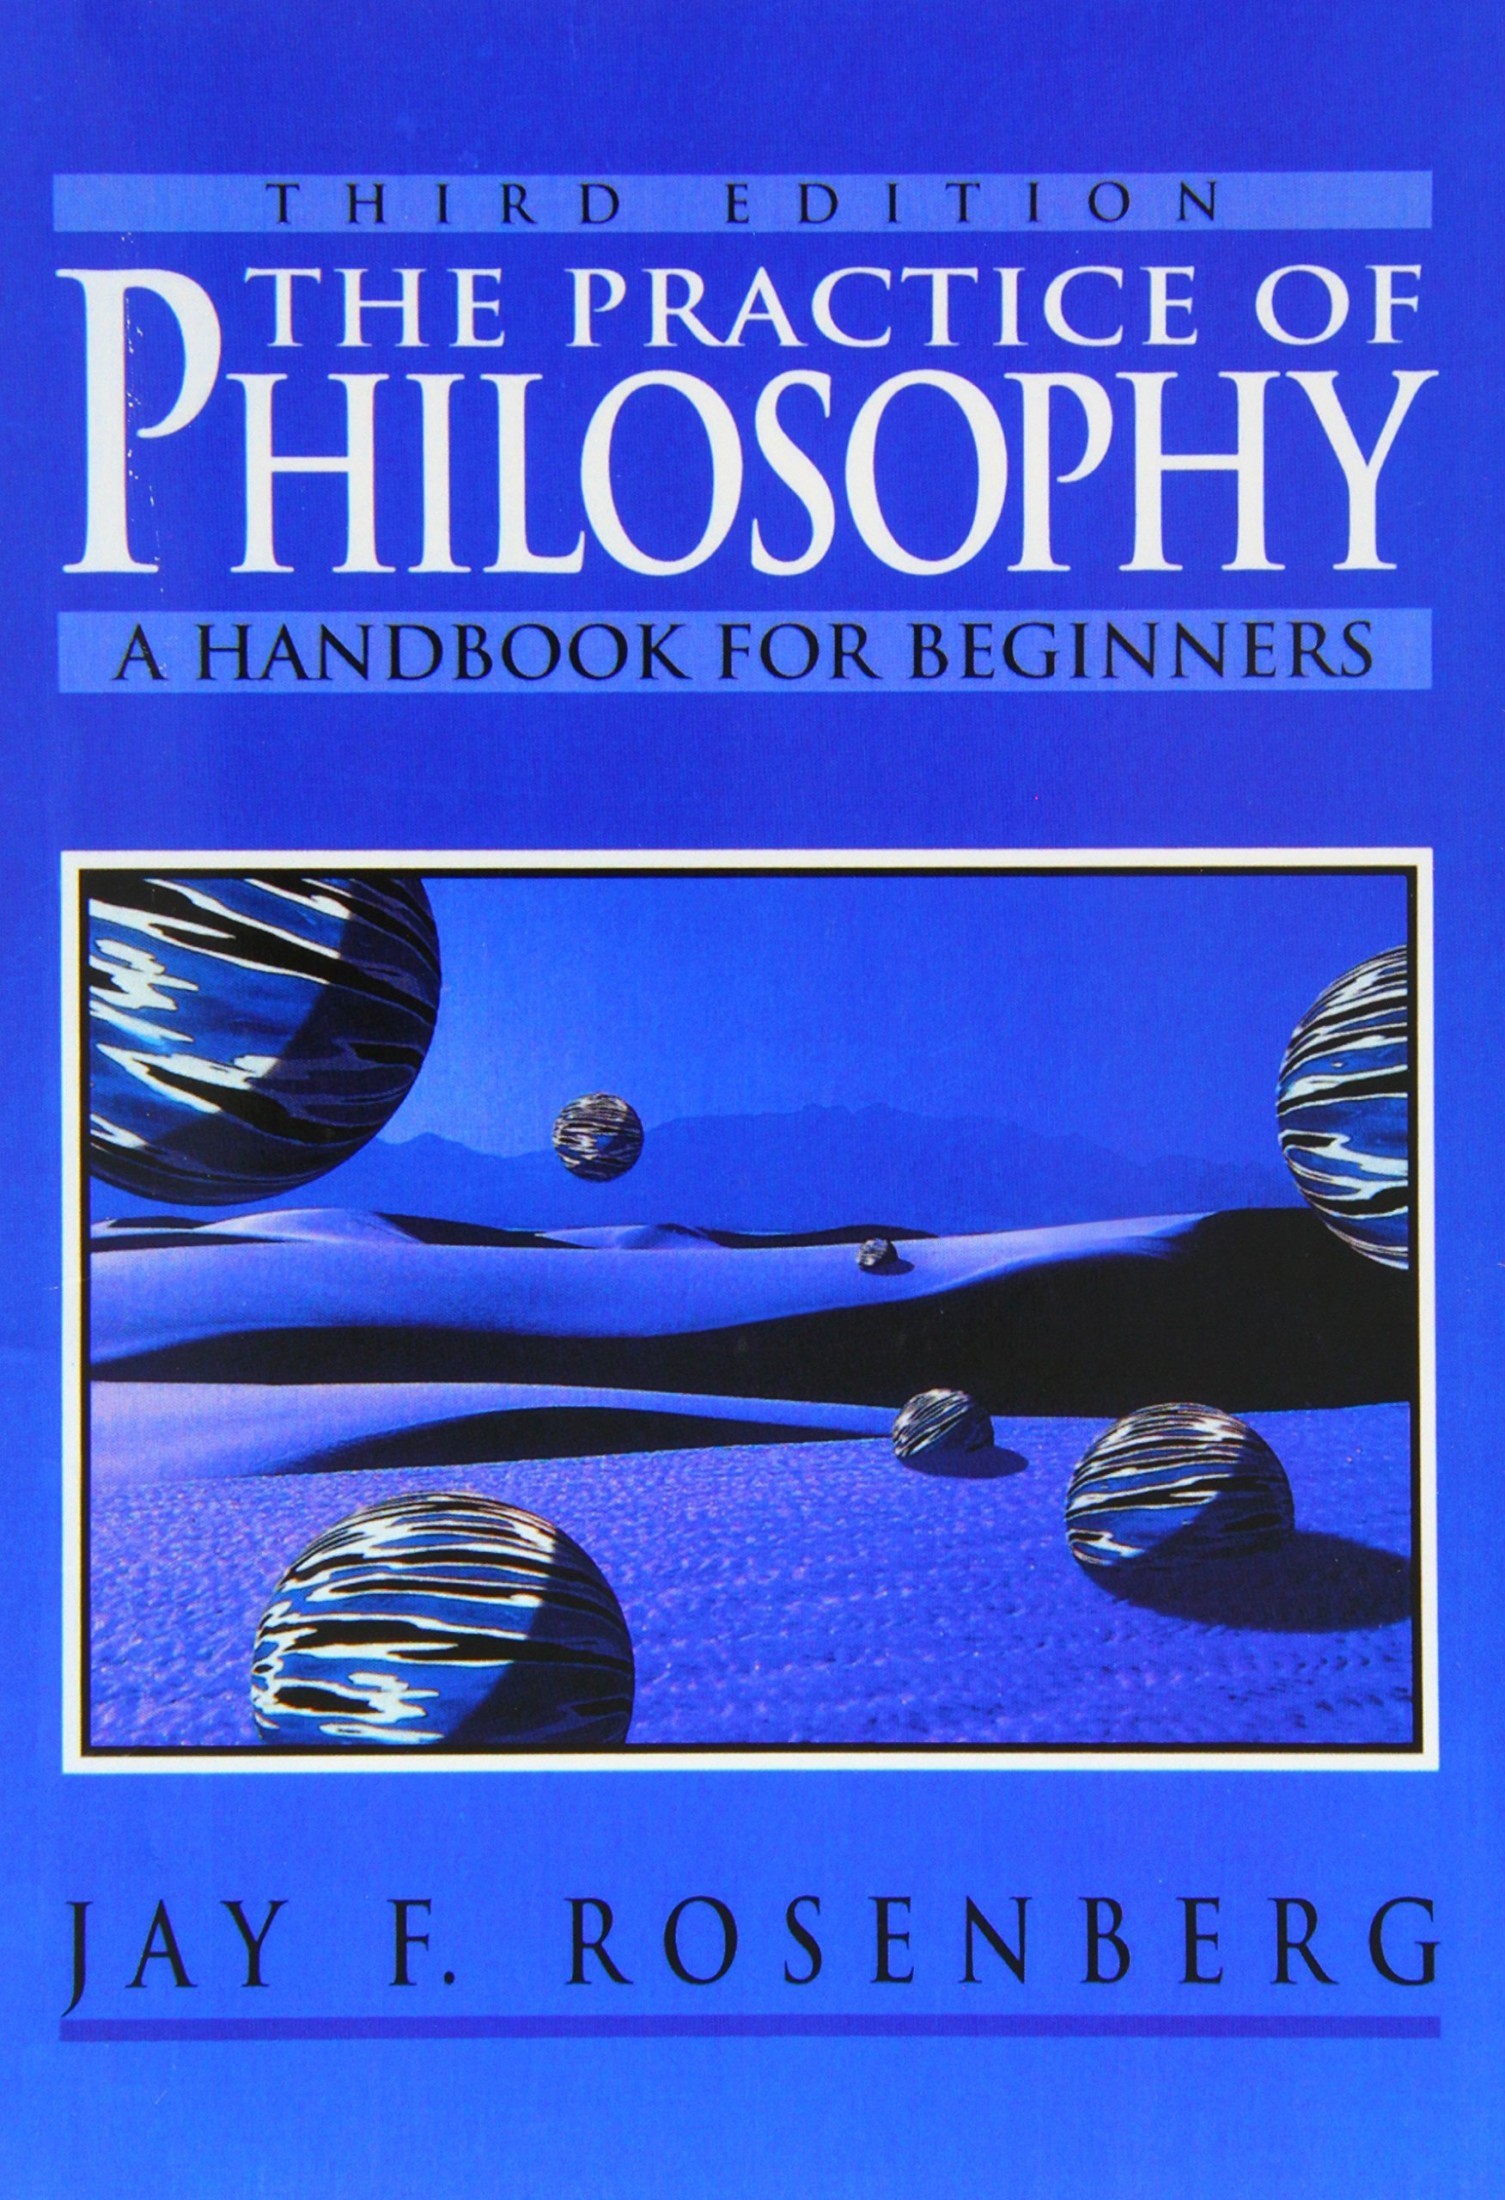 The Practice of Philosophy: A Handbook for Beginners